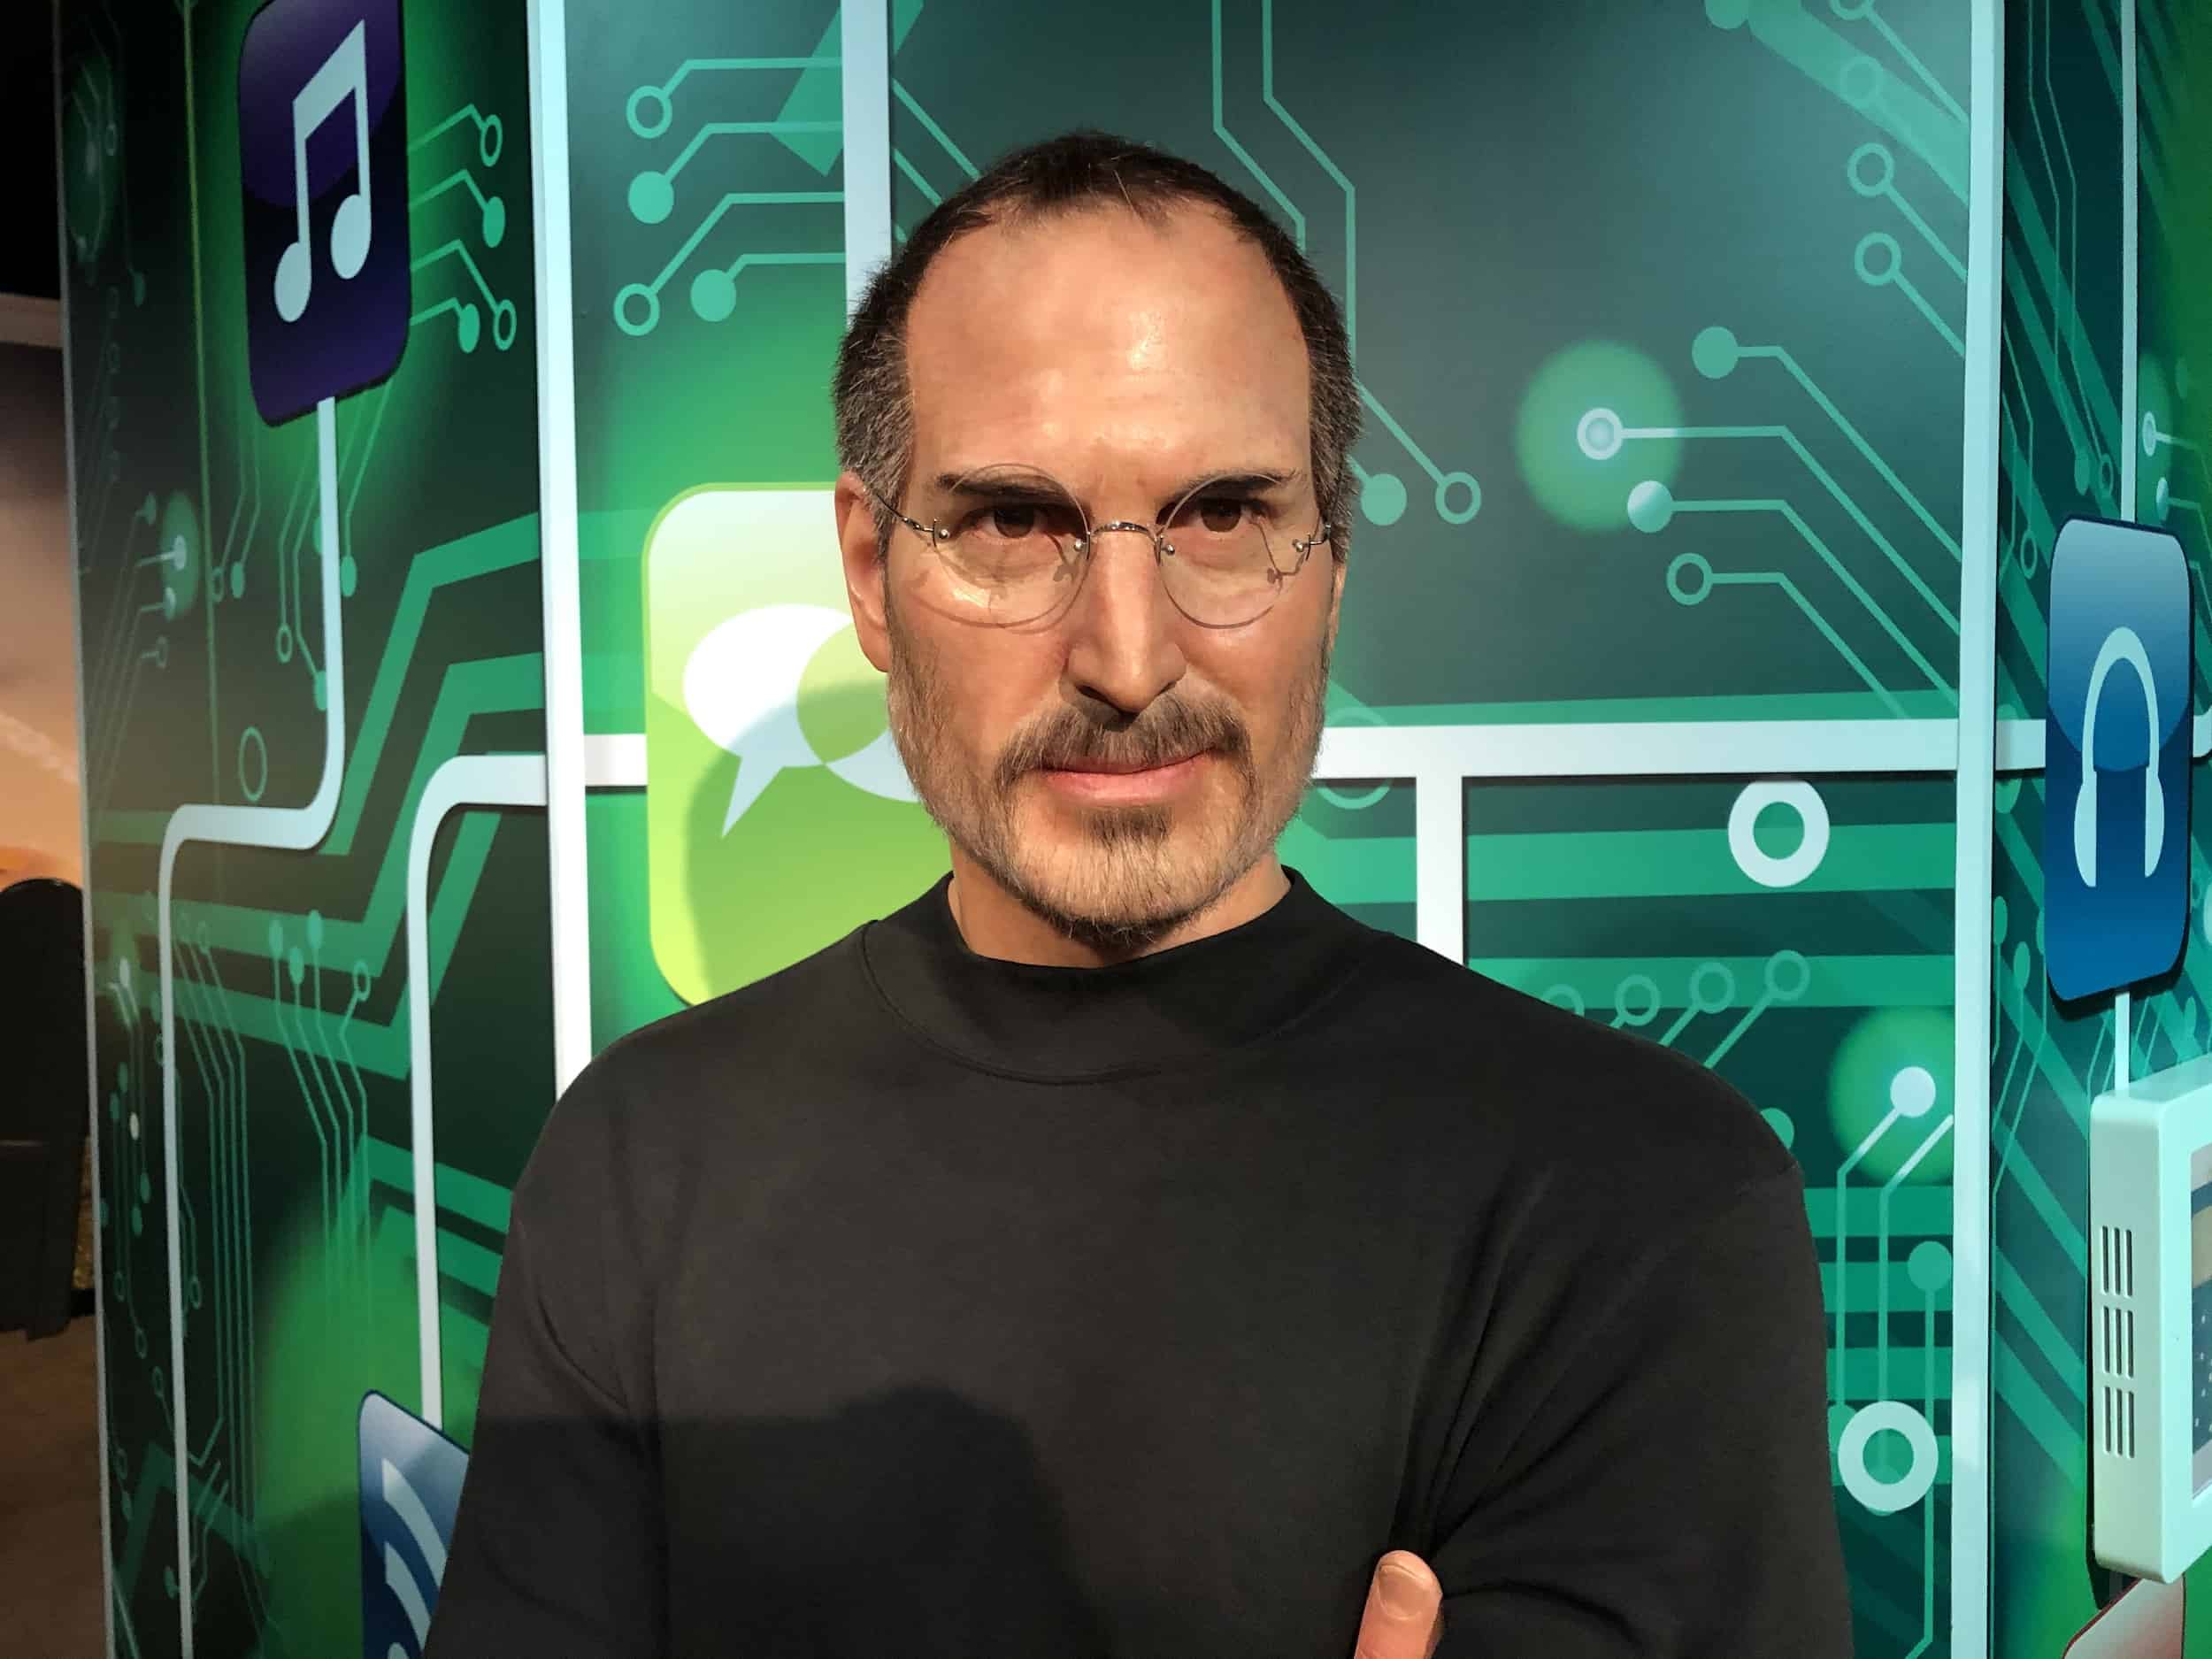 Steve Jobs at Madame Tussauds Istanbul